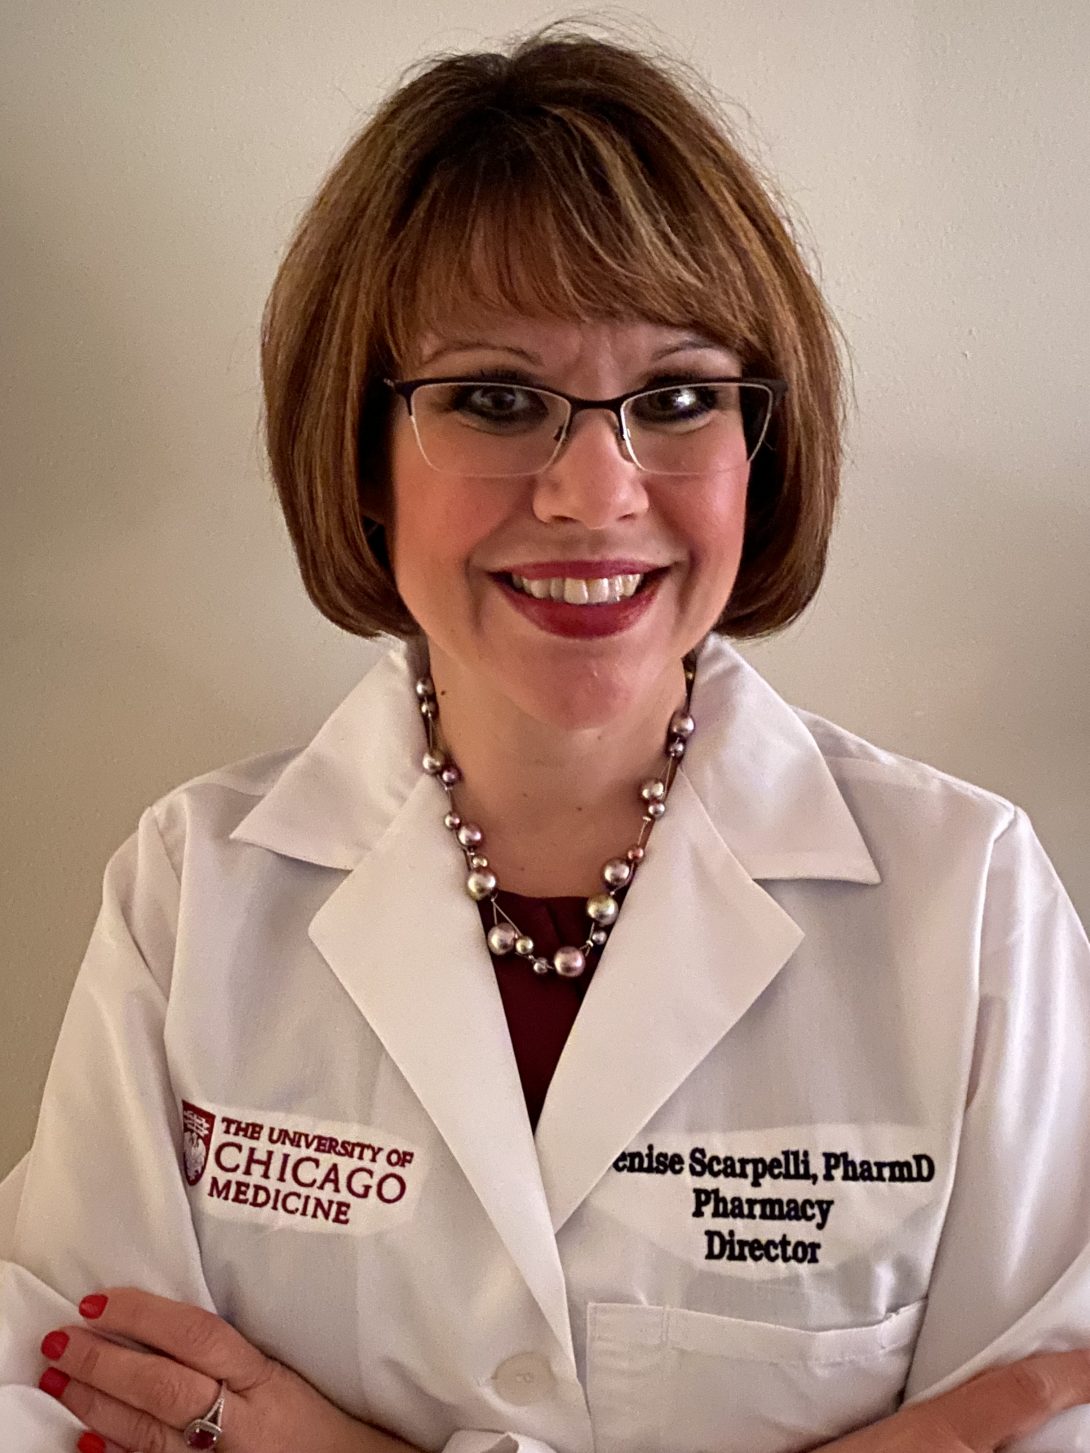 Dr. Denise Scarpelli's Biography